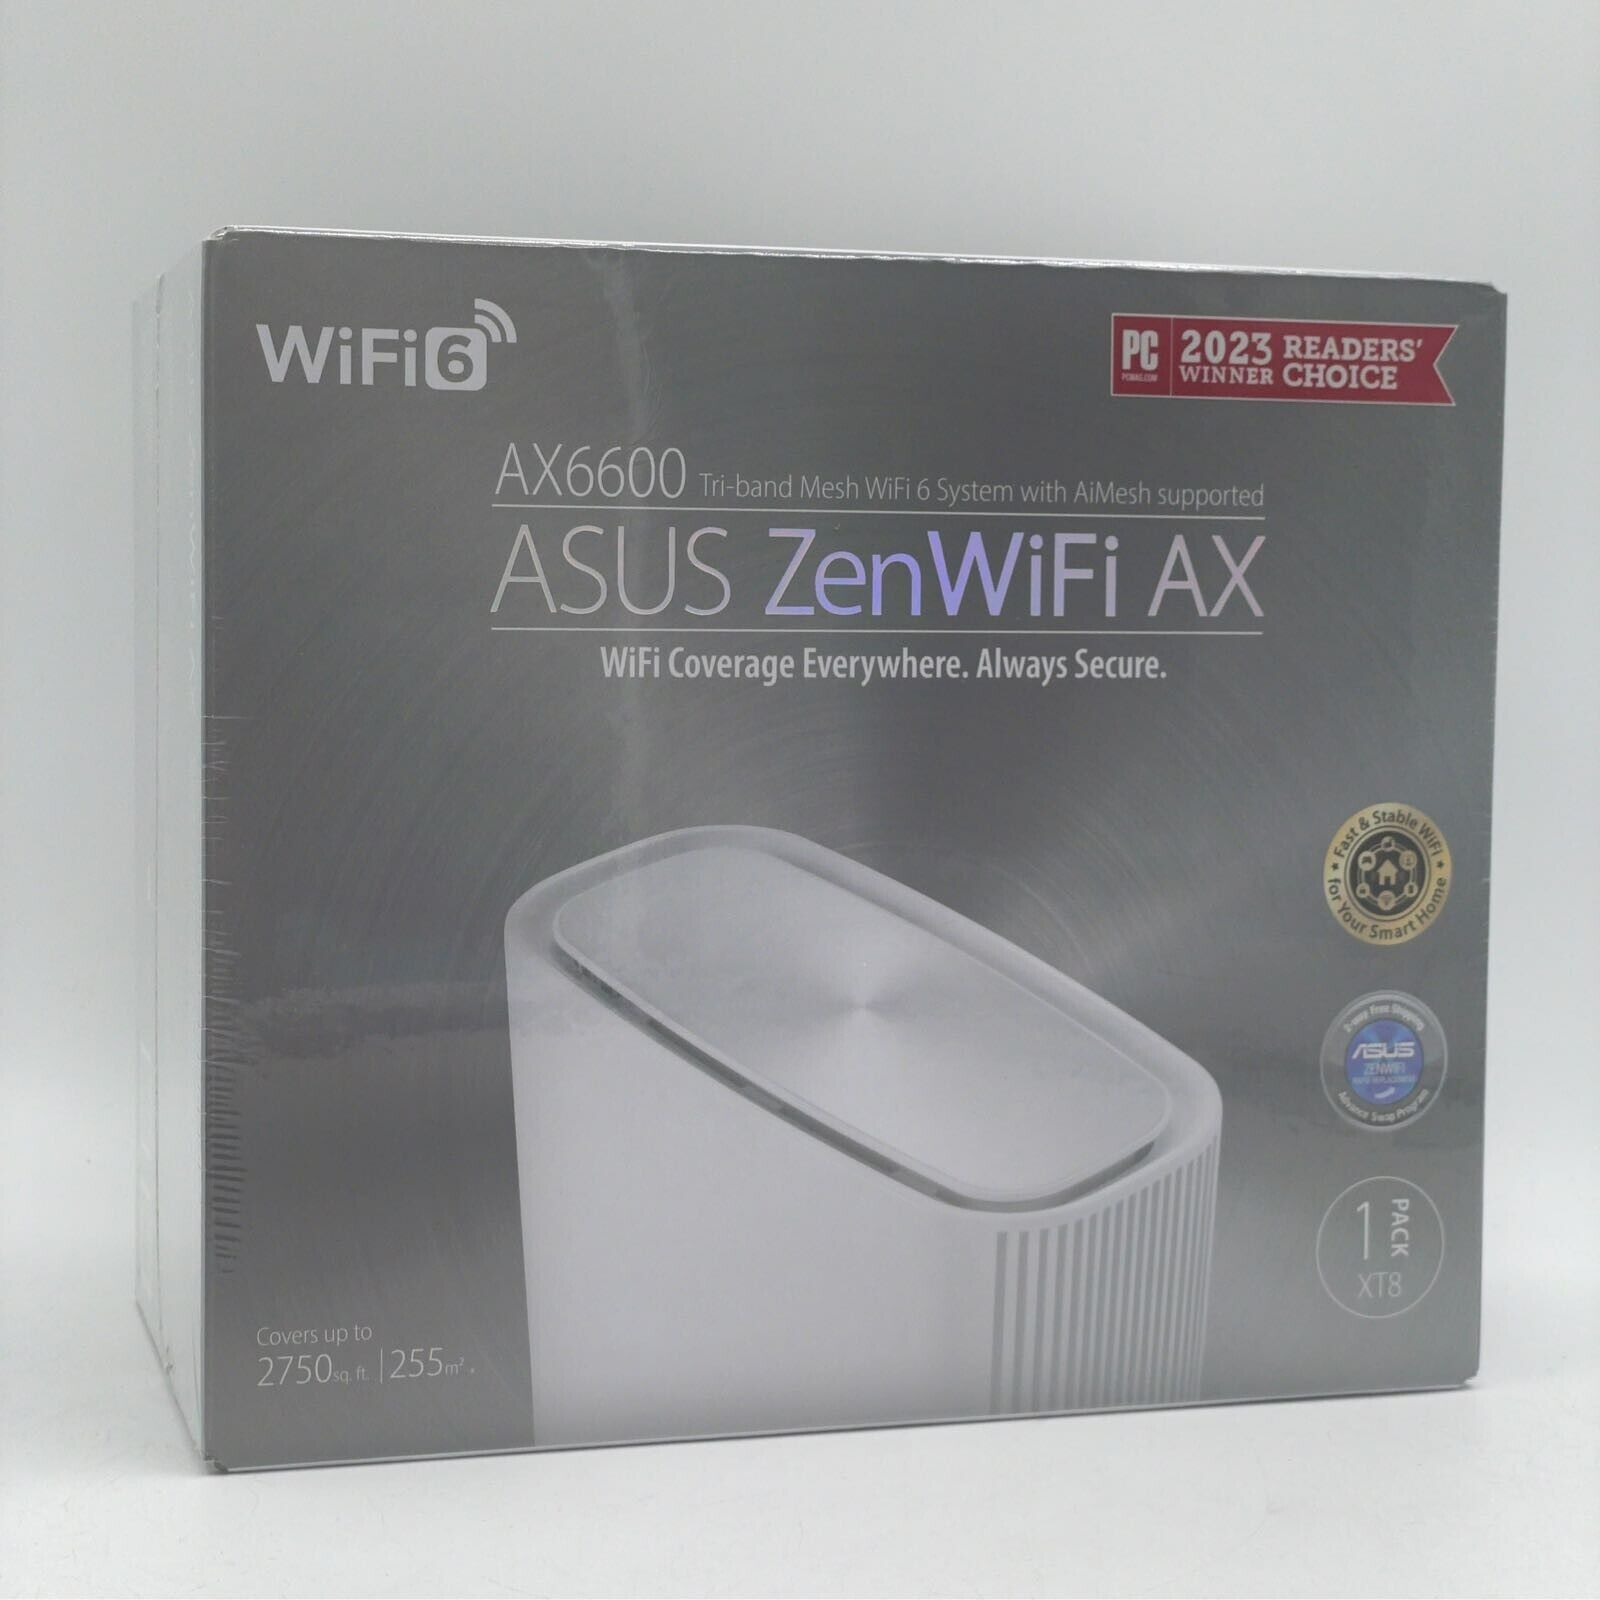 ASUS ZenWiFi XT8 AX6600 Tri-Band WiFi 6 AiMesh System Router (1-pack) - White